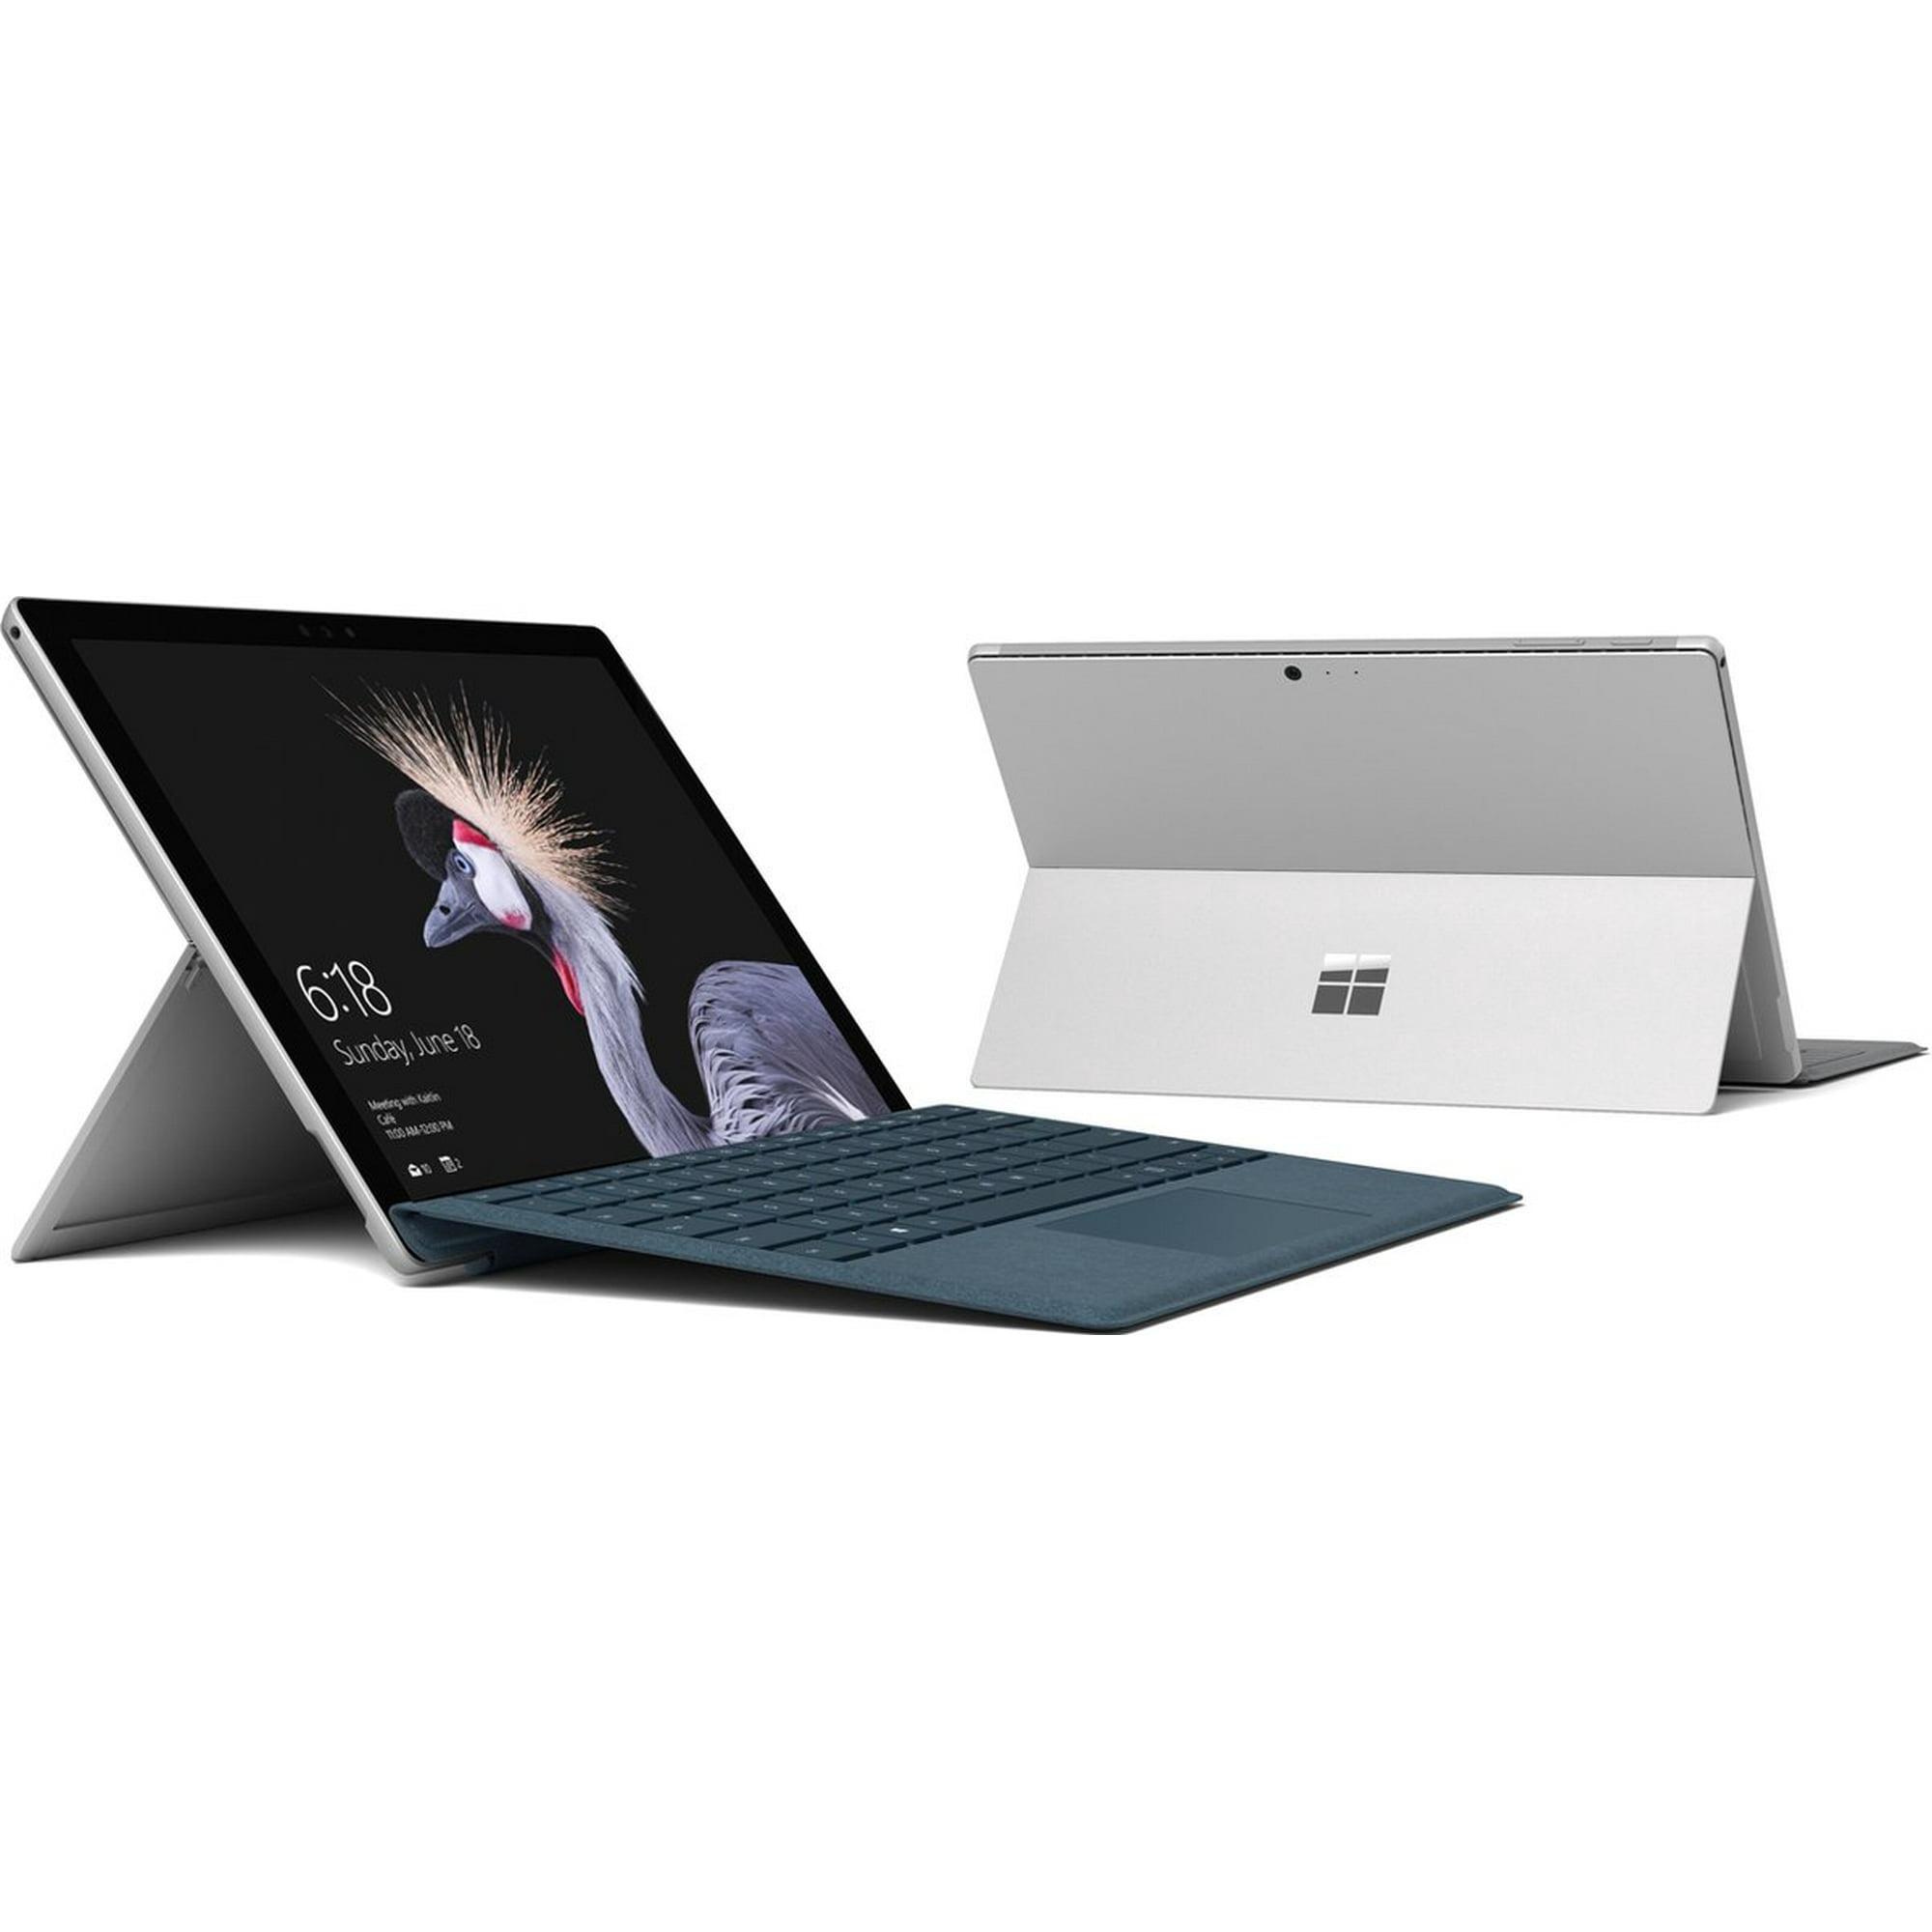 Tablette Microsoft Surface Pro 4 - Intel Core(TM) i5-6300U CPU 2